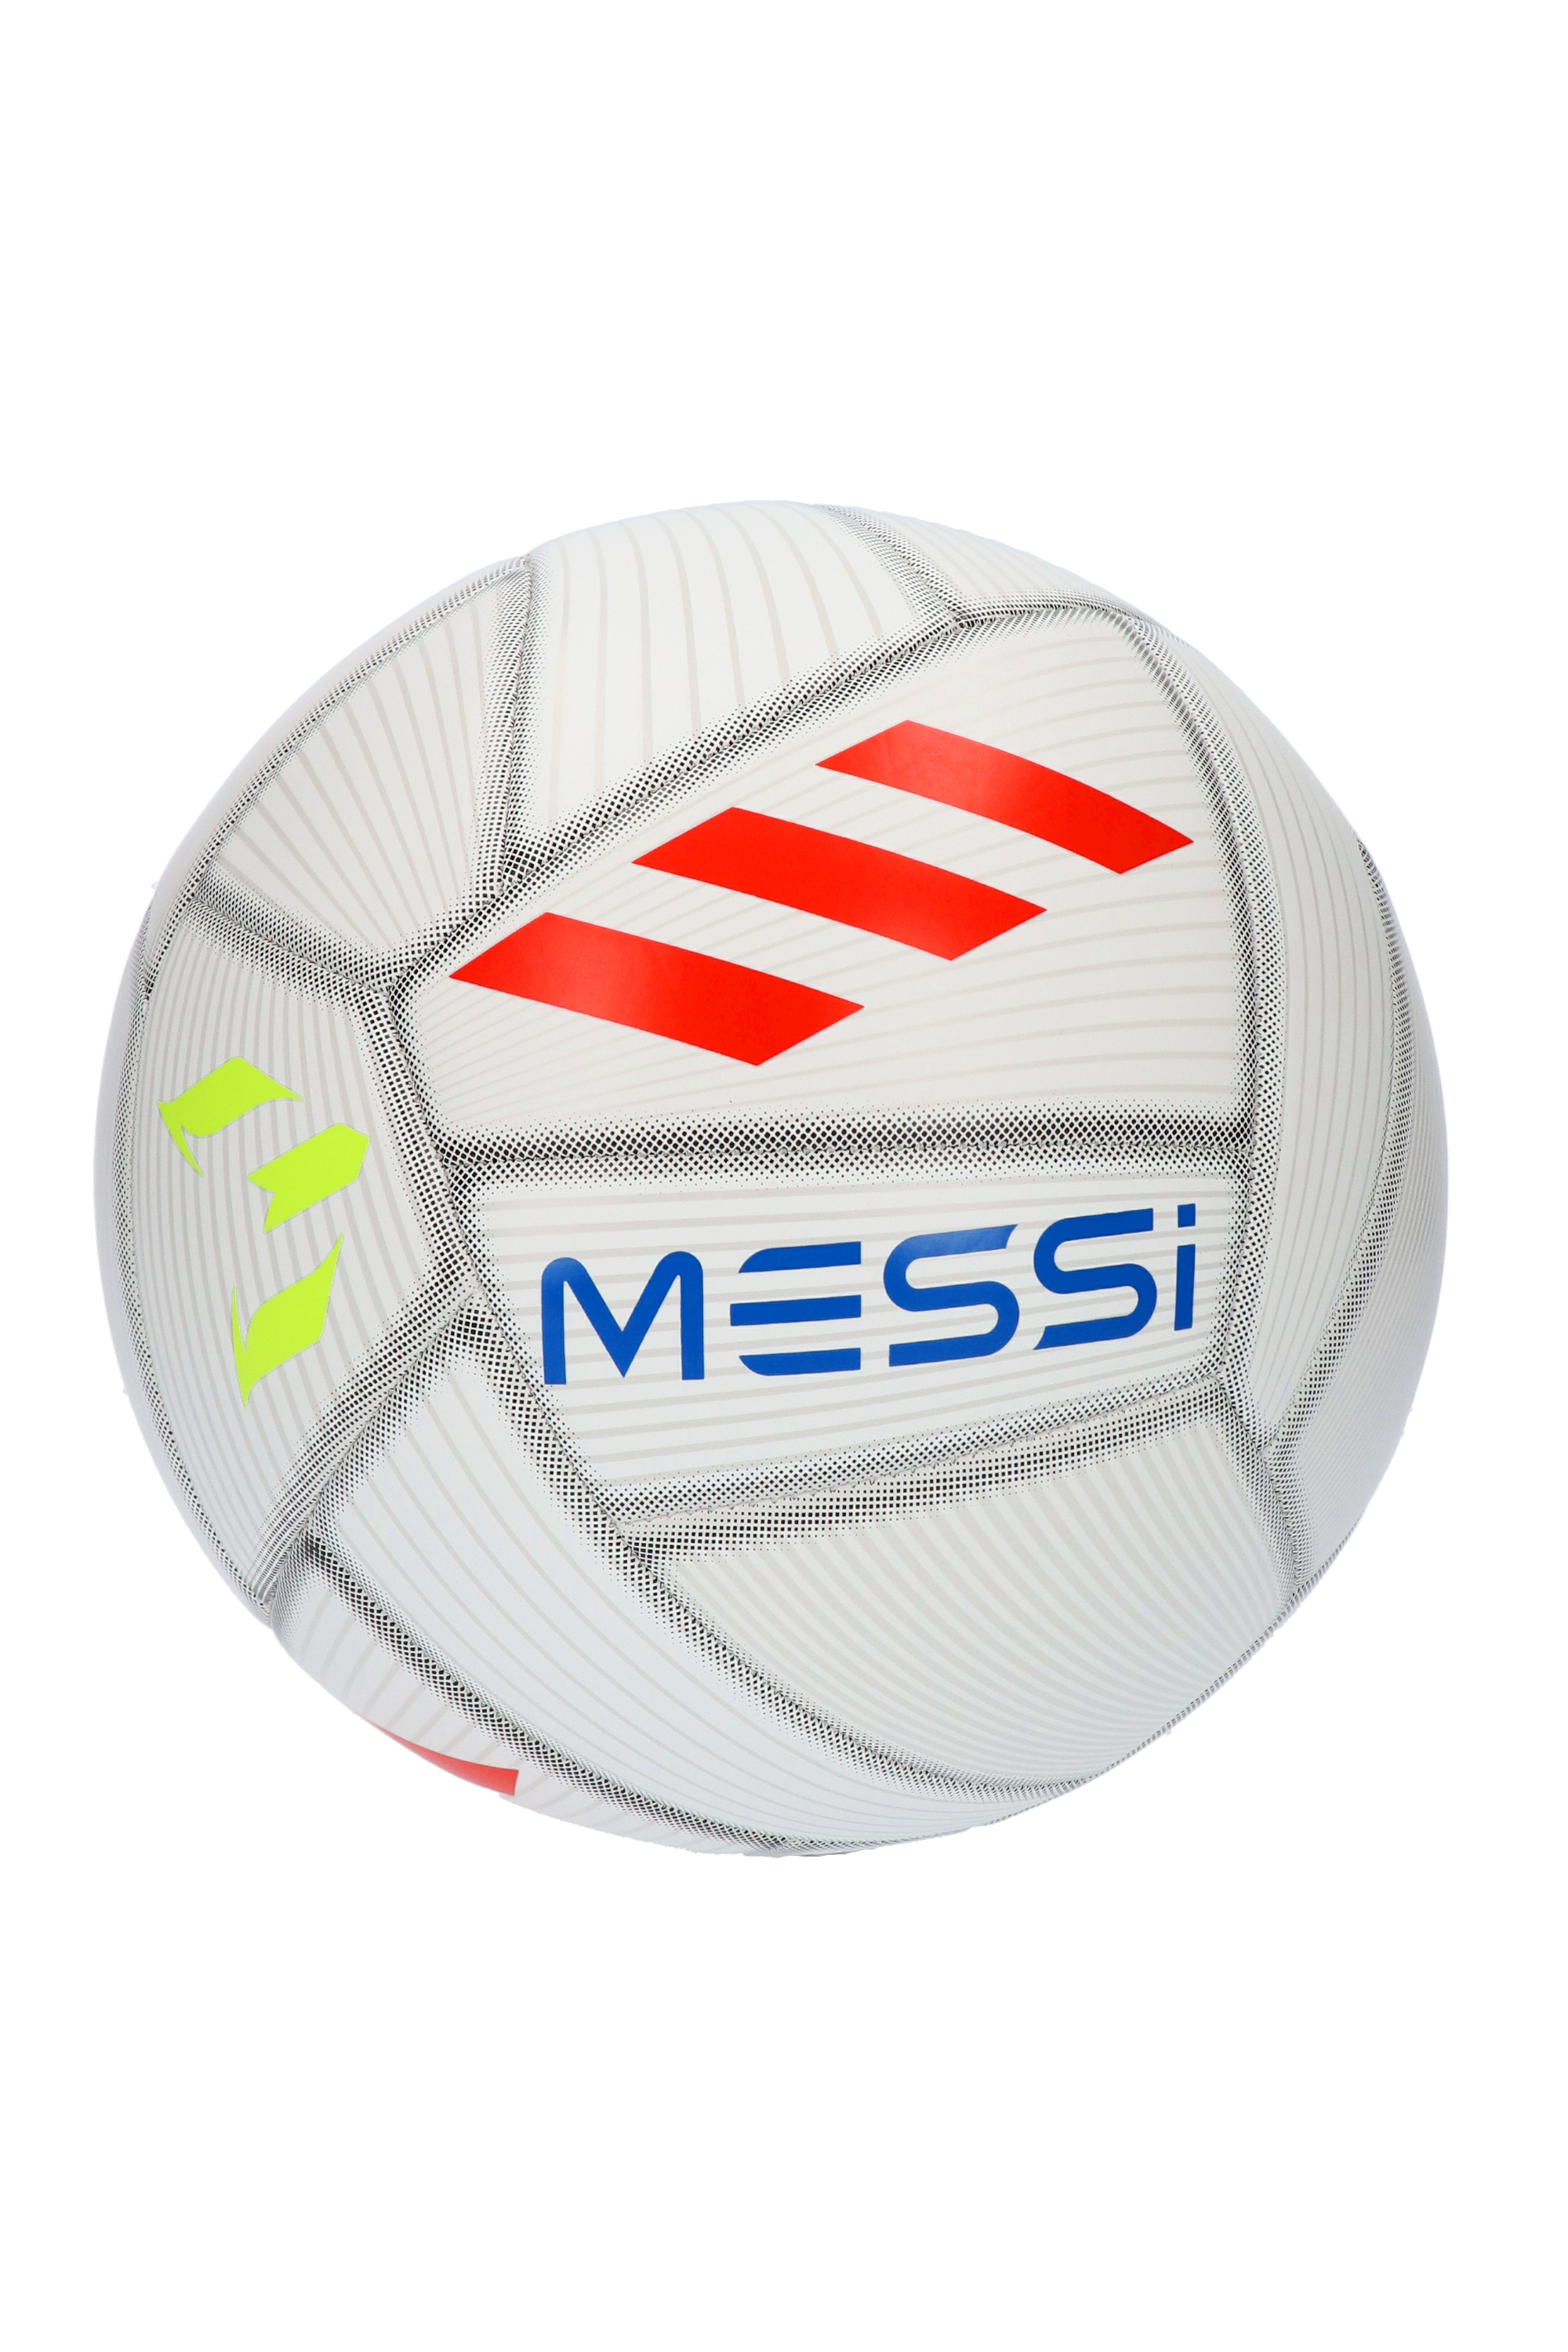 Ball adidas Messi Capitano size 4 | R-GOL.com - Football boots \u0026 equipment